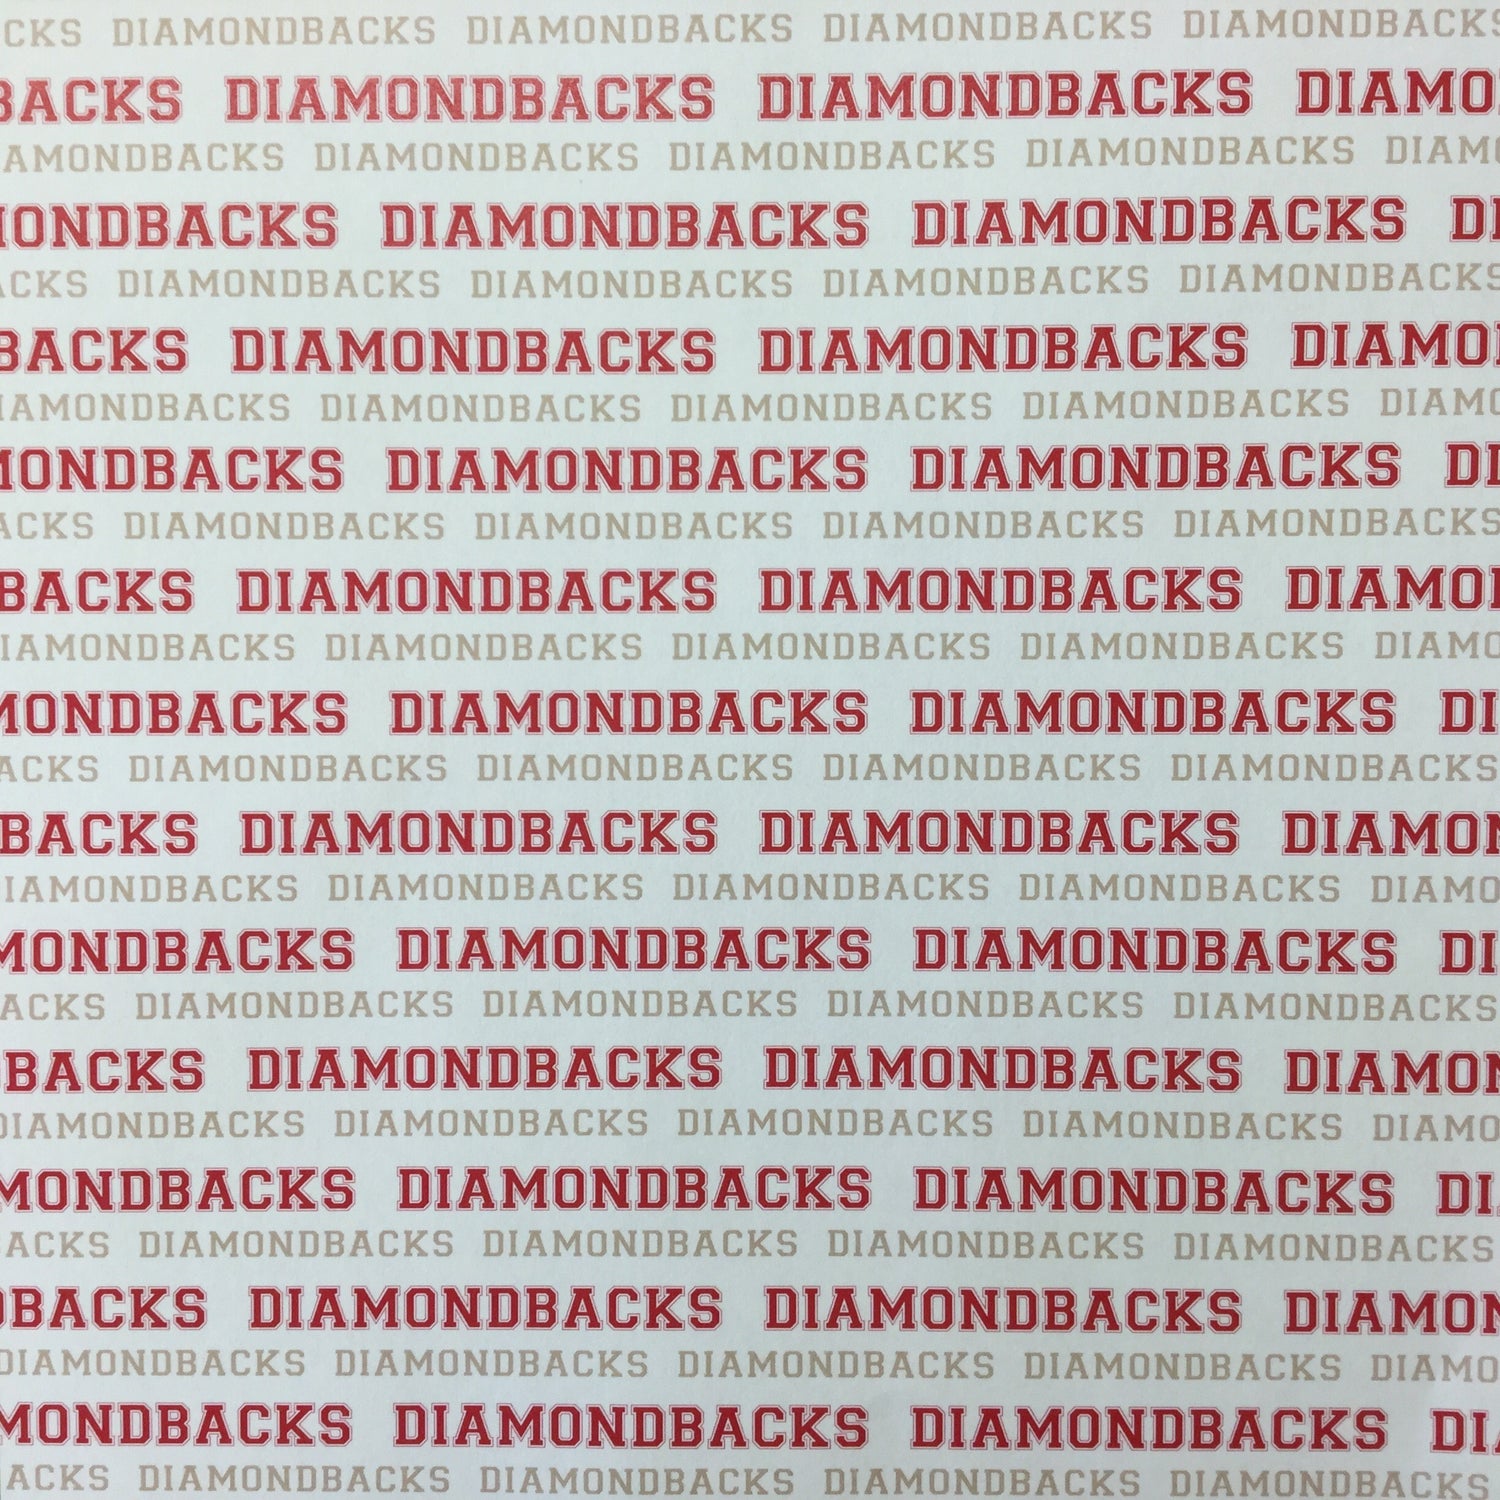 DIAMONDBACKS BASEBALL Pride Kit 12&quot;X12&quot; Scrapbook Paper